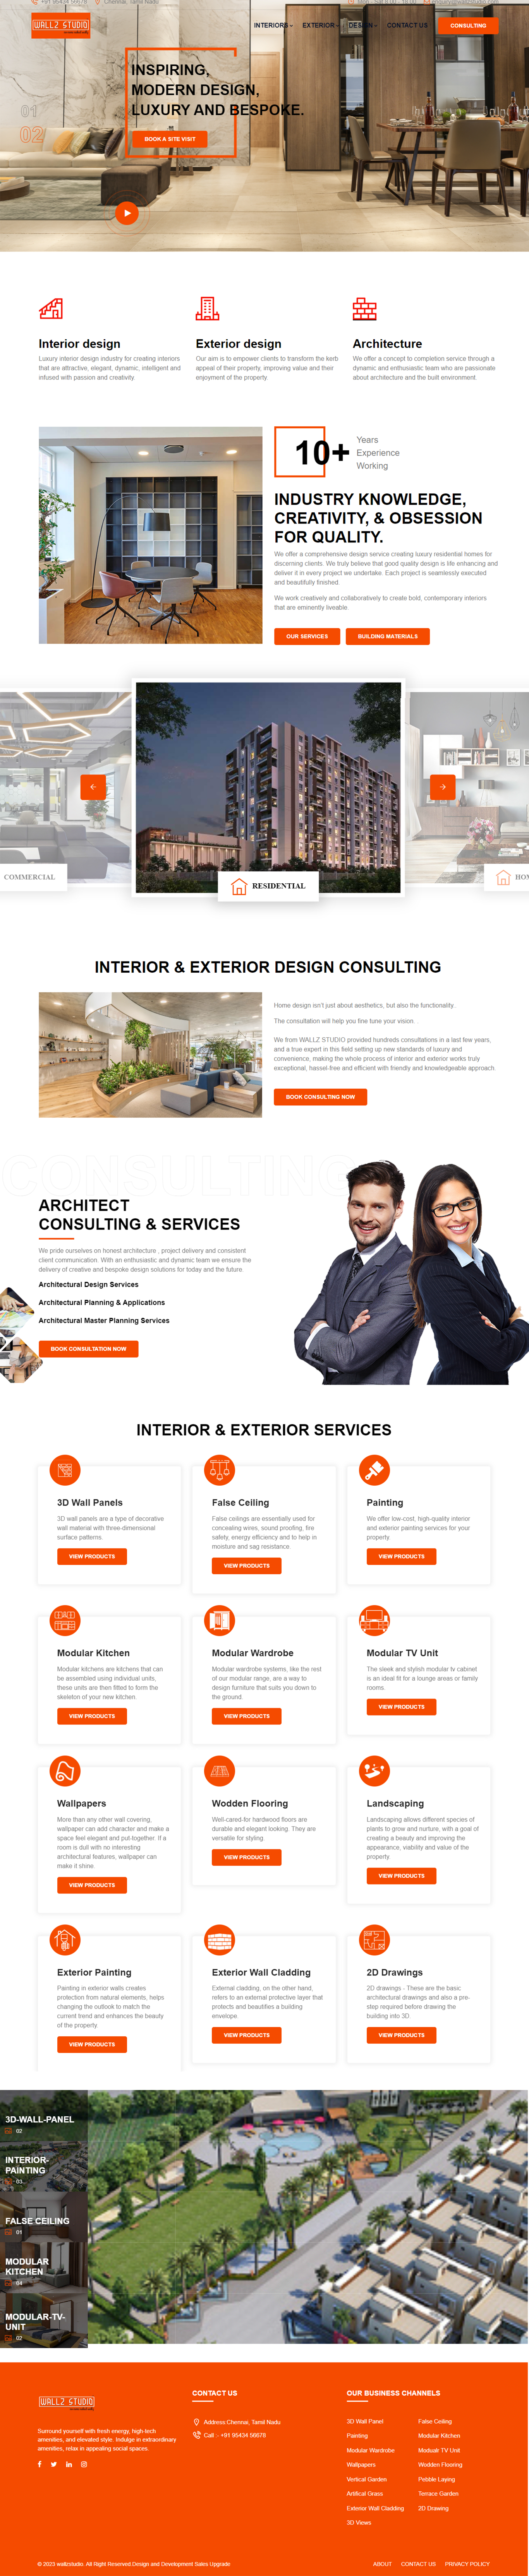 website-development-service-for-interior-design-company